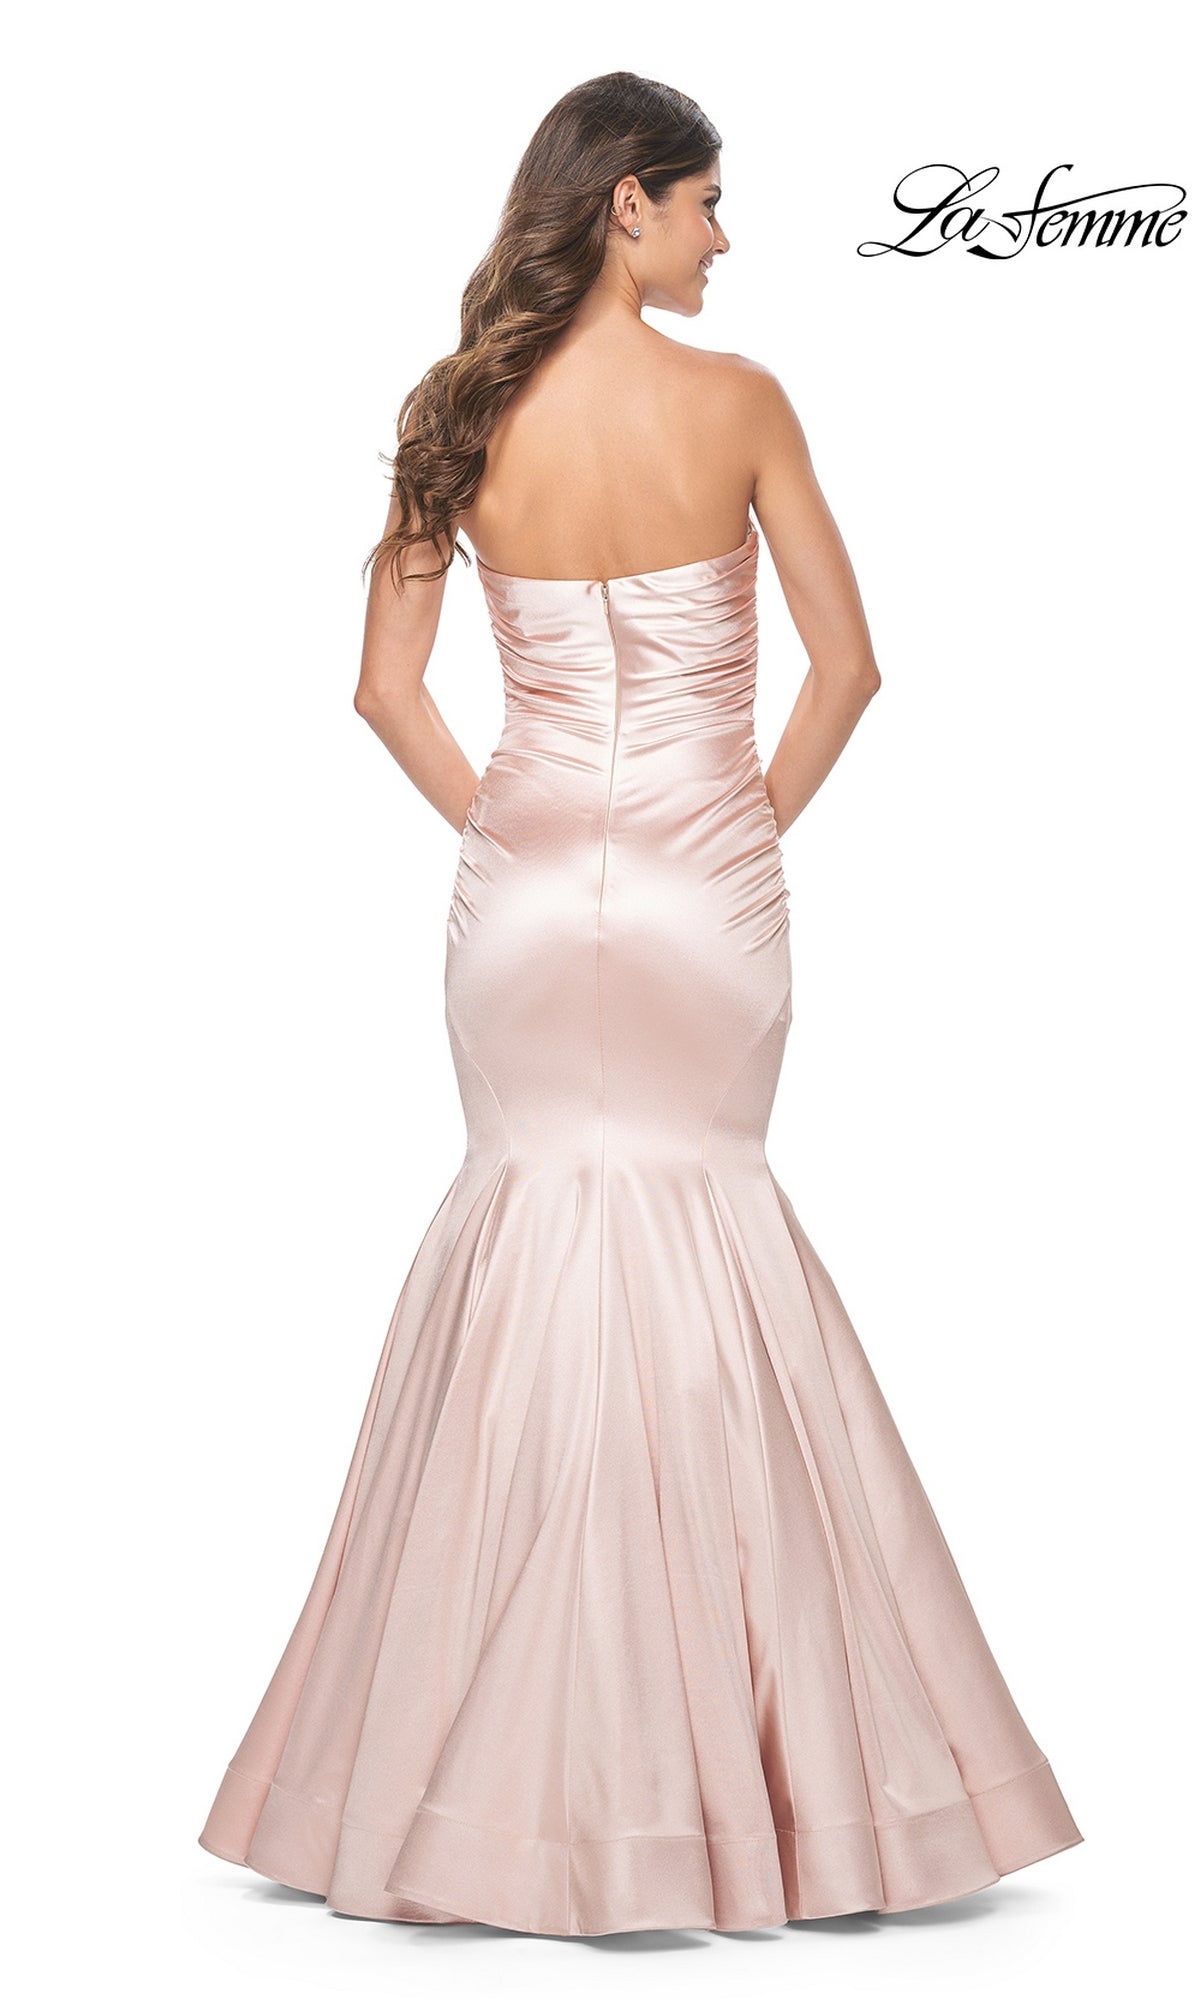 La Femme Strapless Long Mermaid Prom Dress 31980